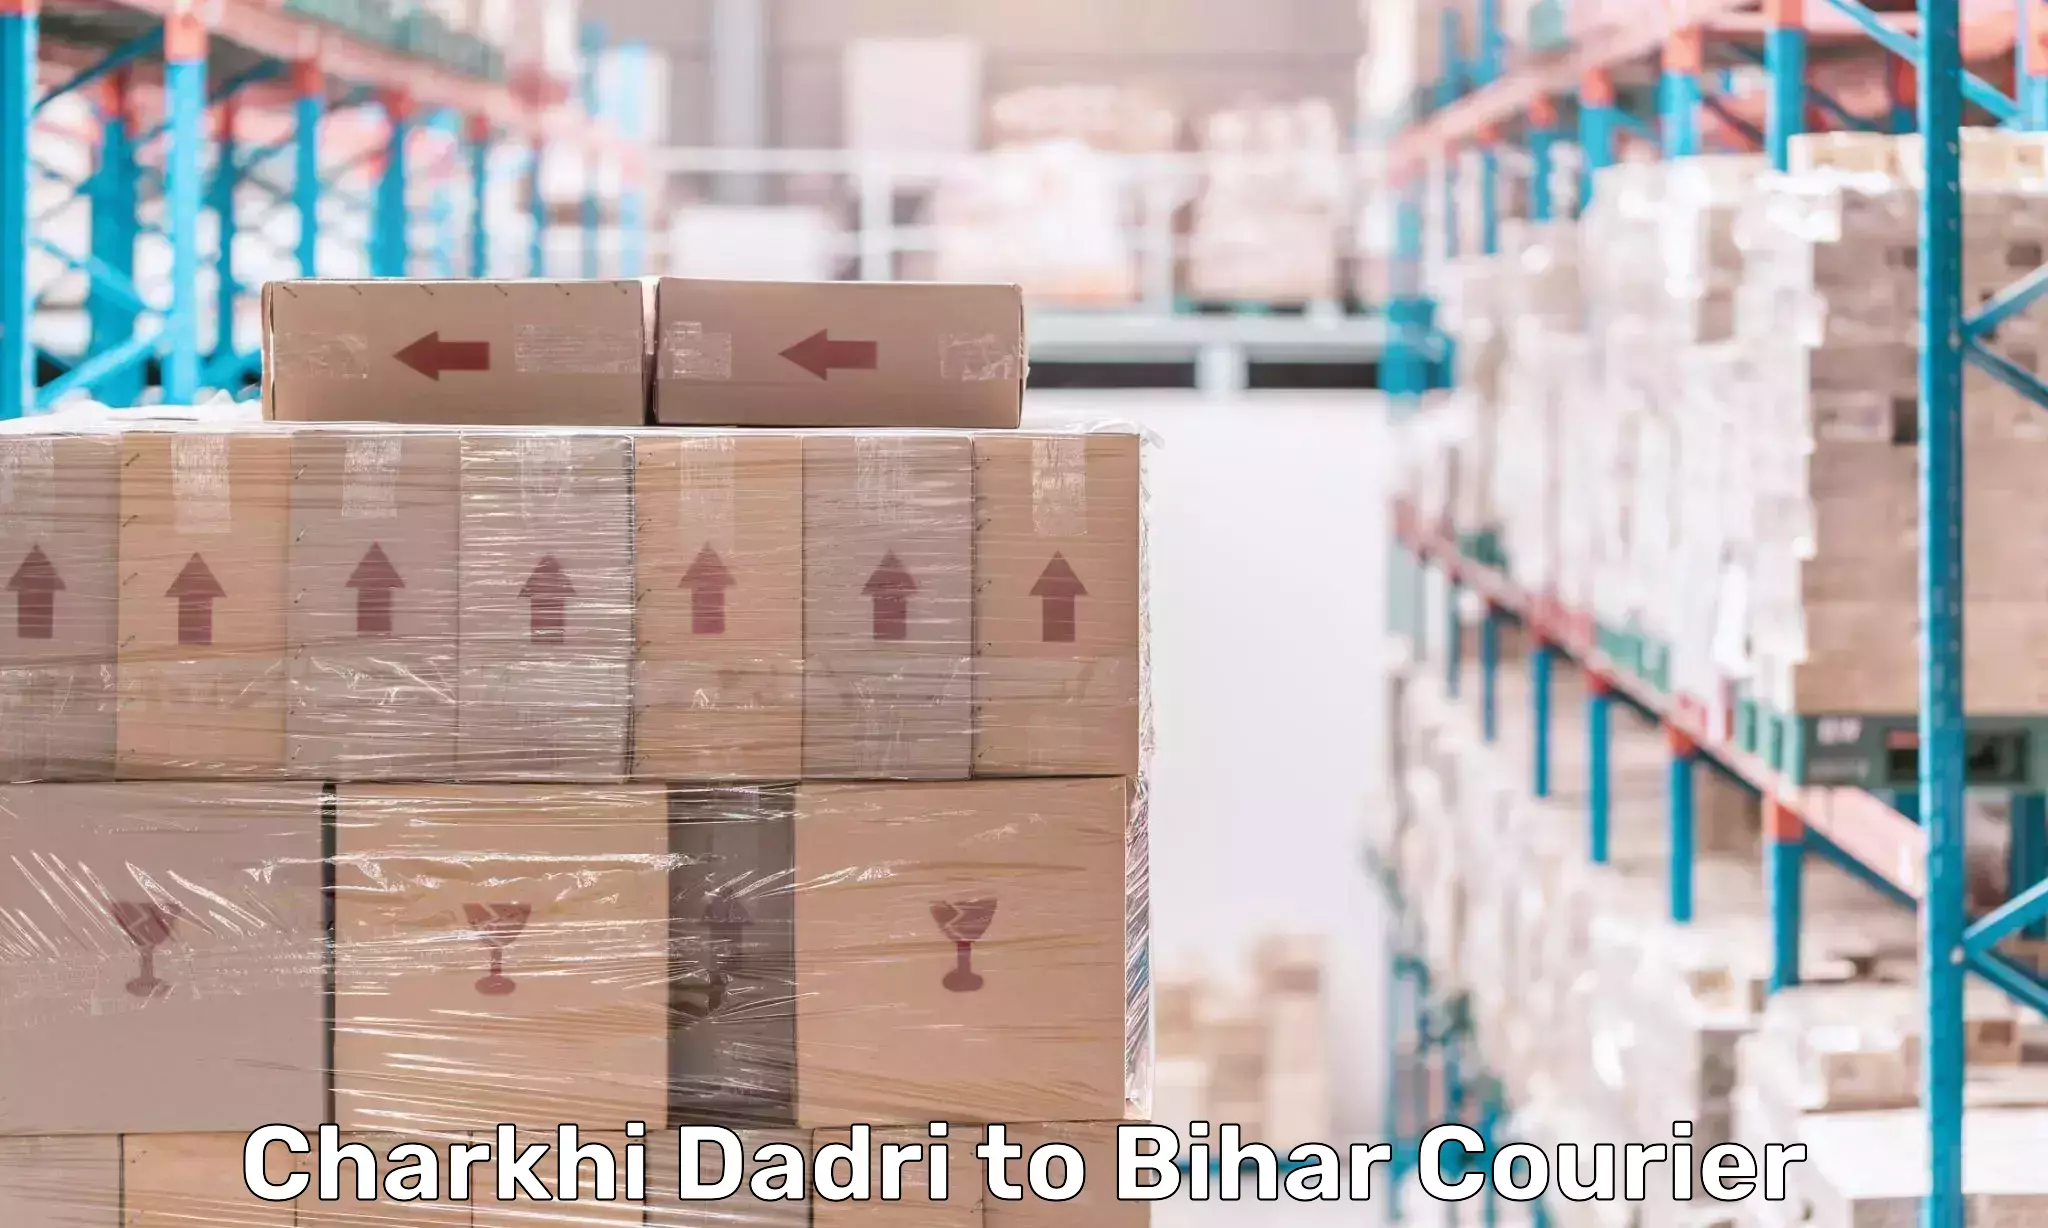 State-of-the-art courier technology Charkhi Dadri to Aurangabad Bihar